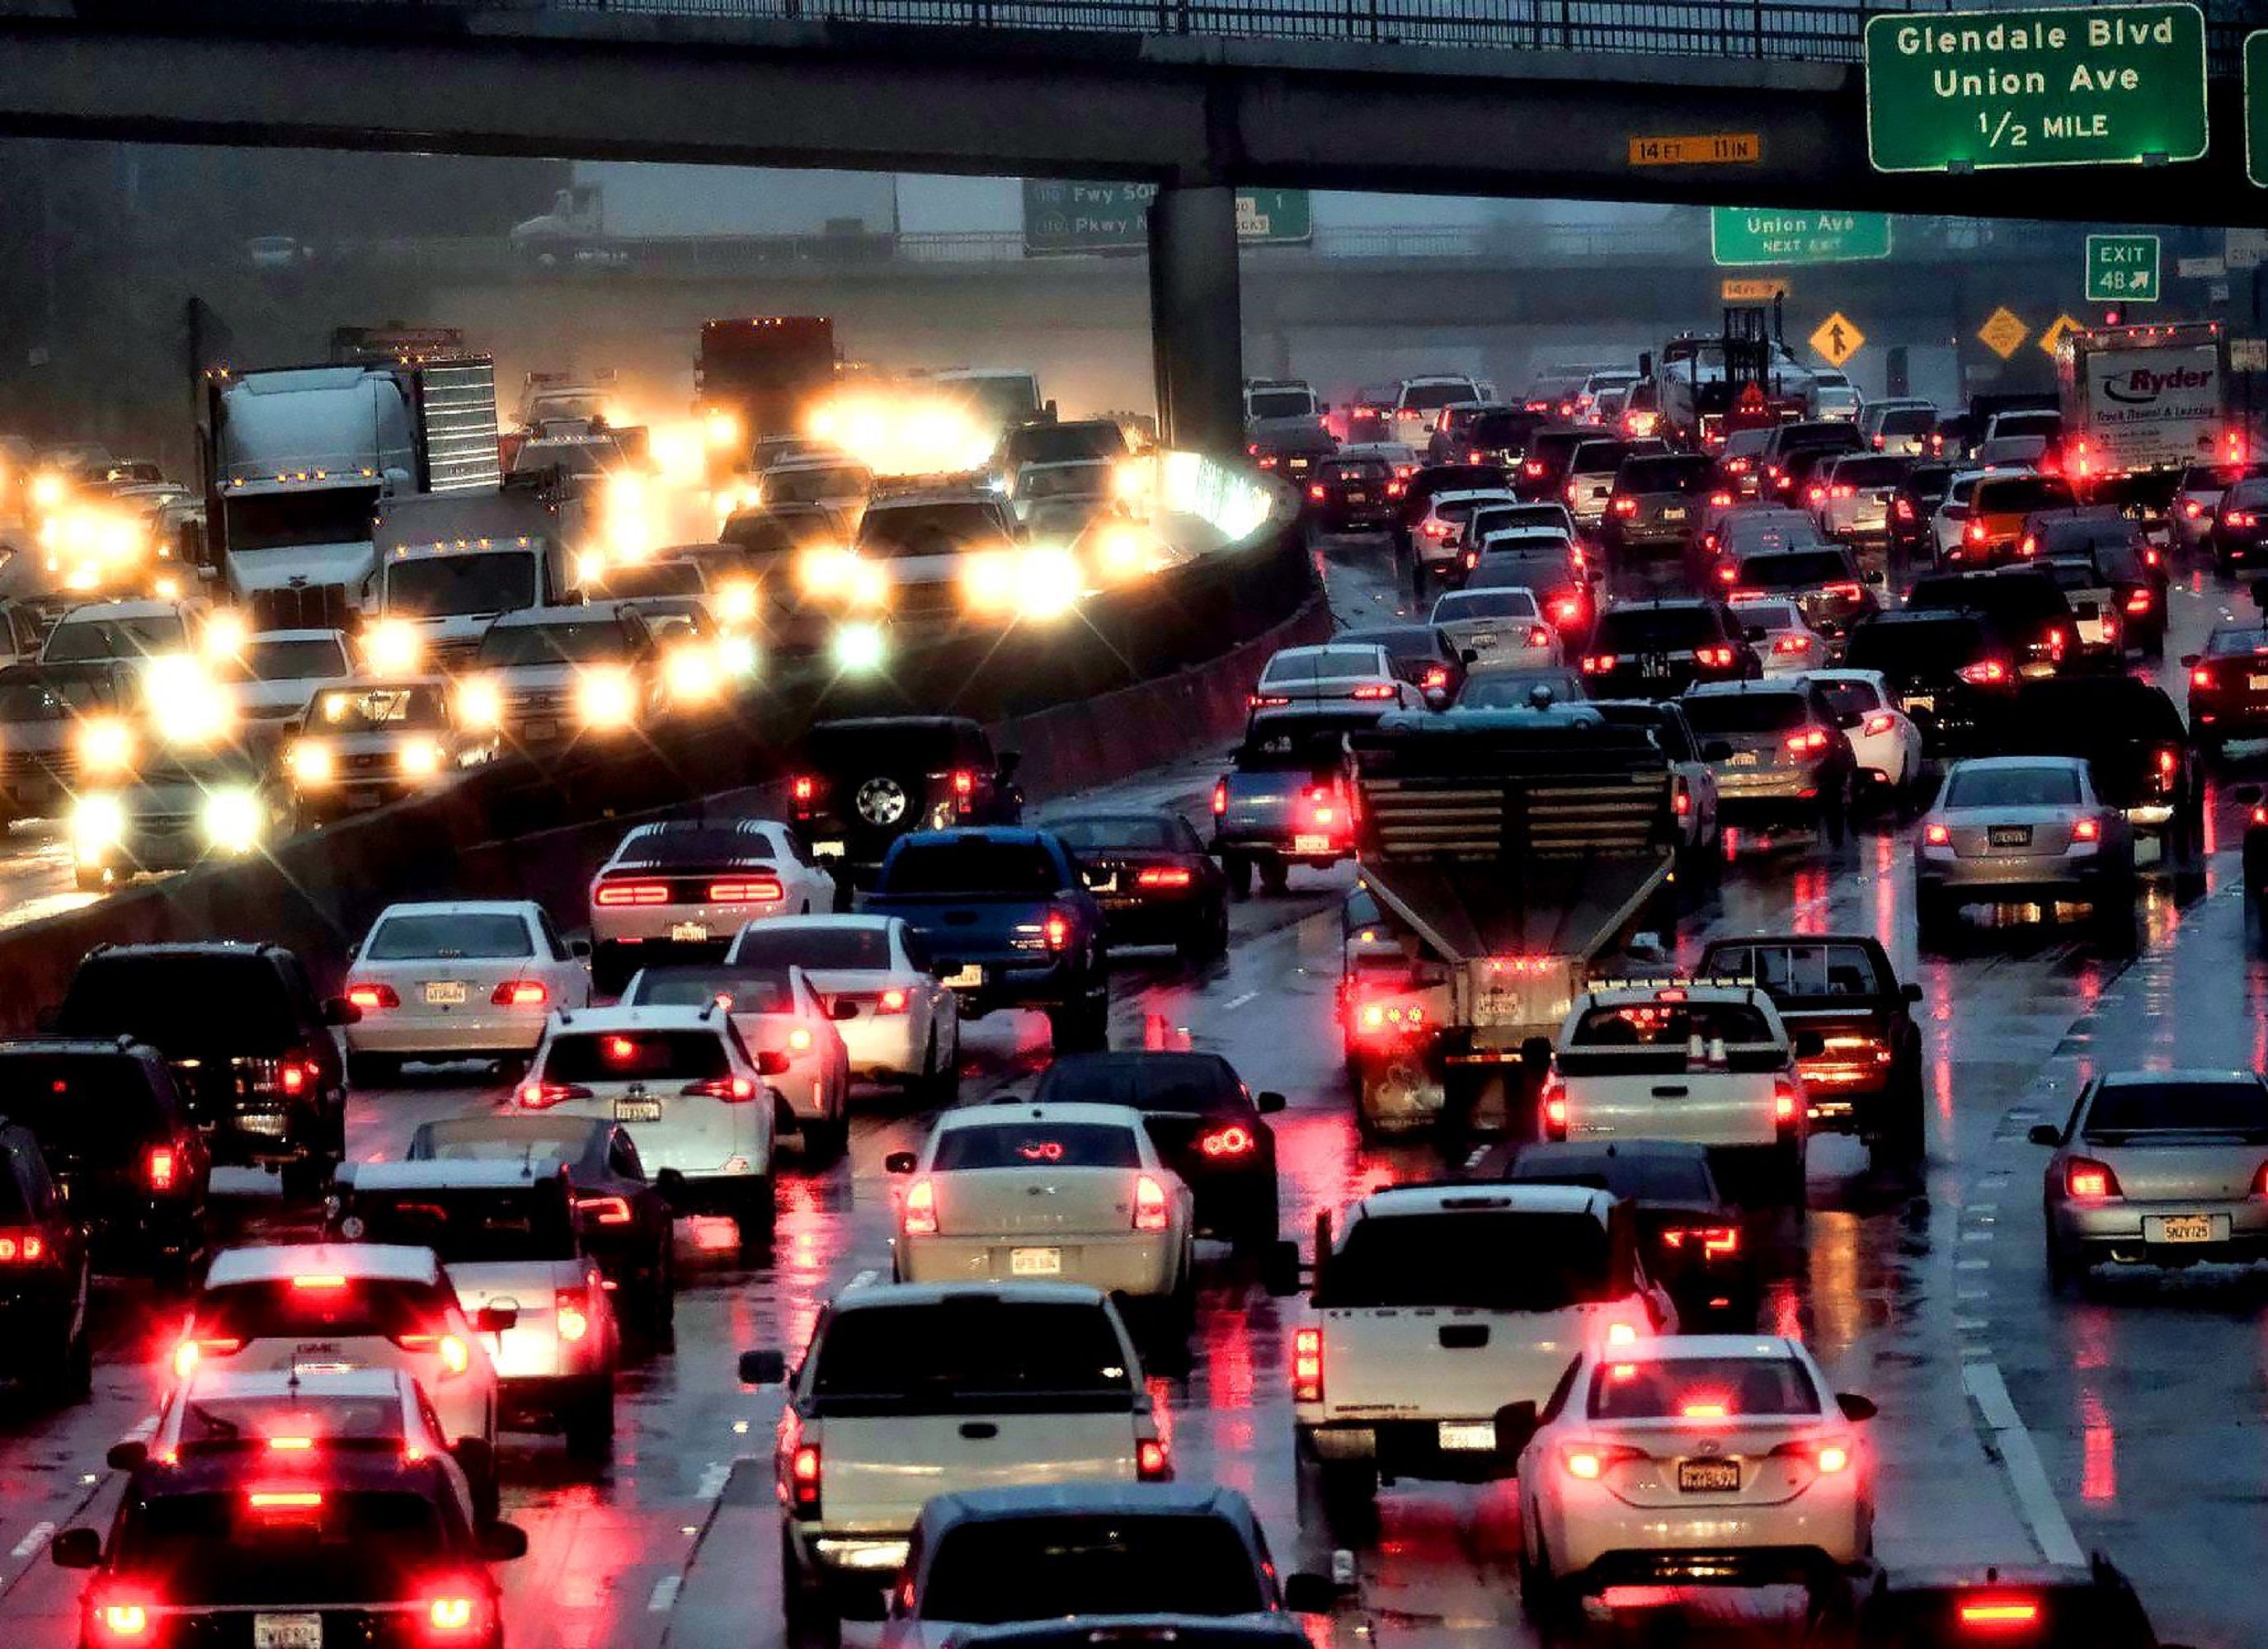 new york city gridlock alert days 2015